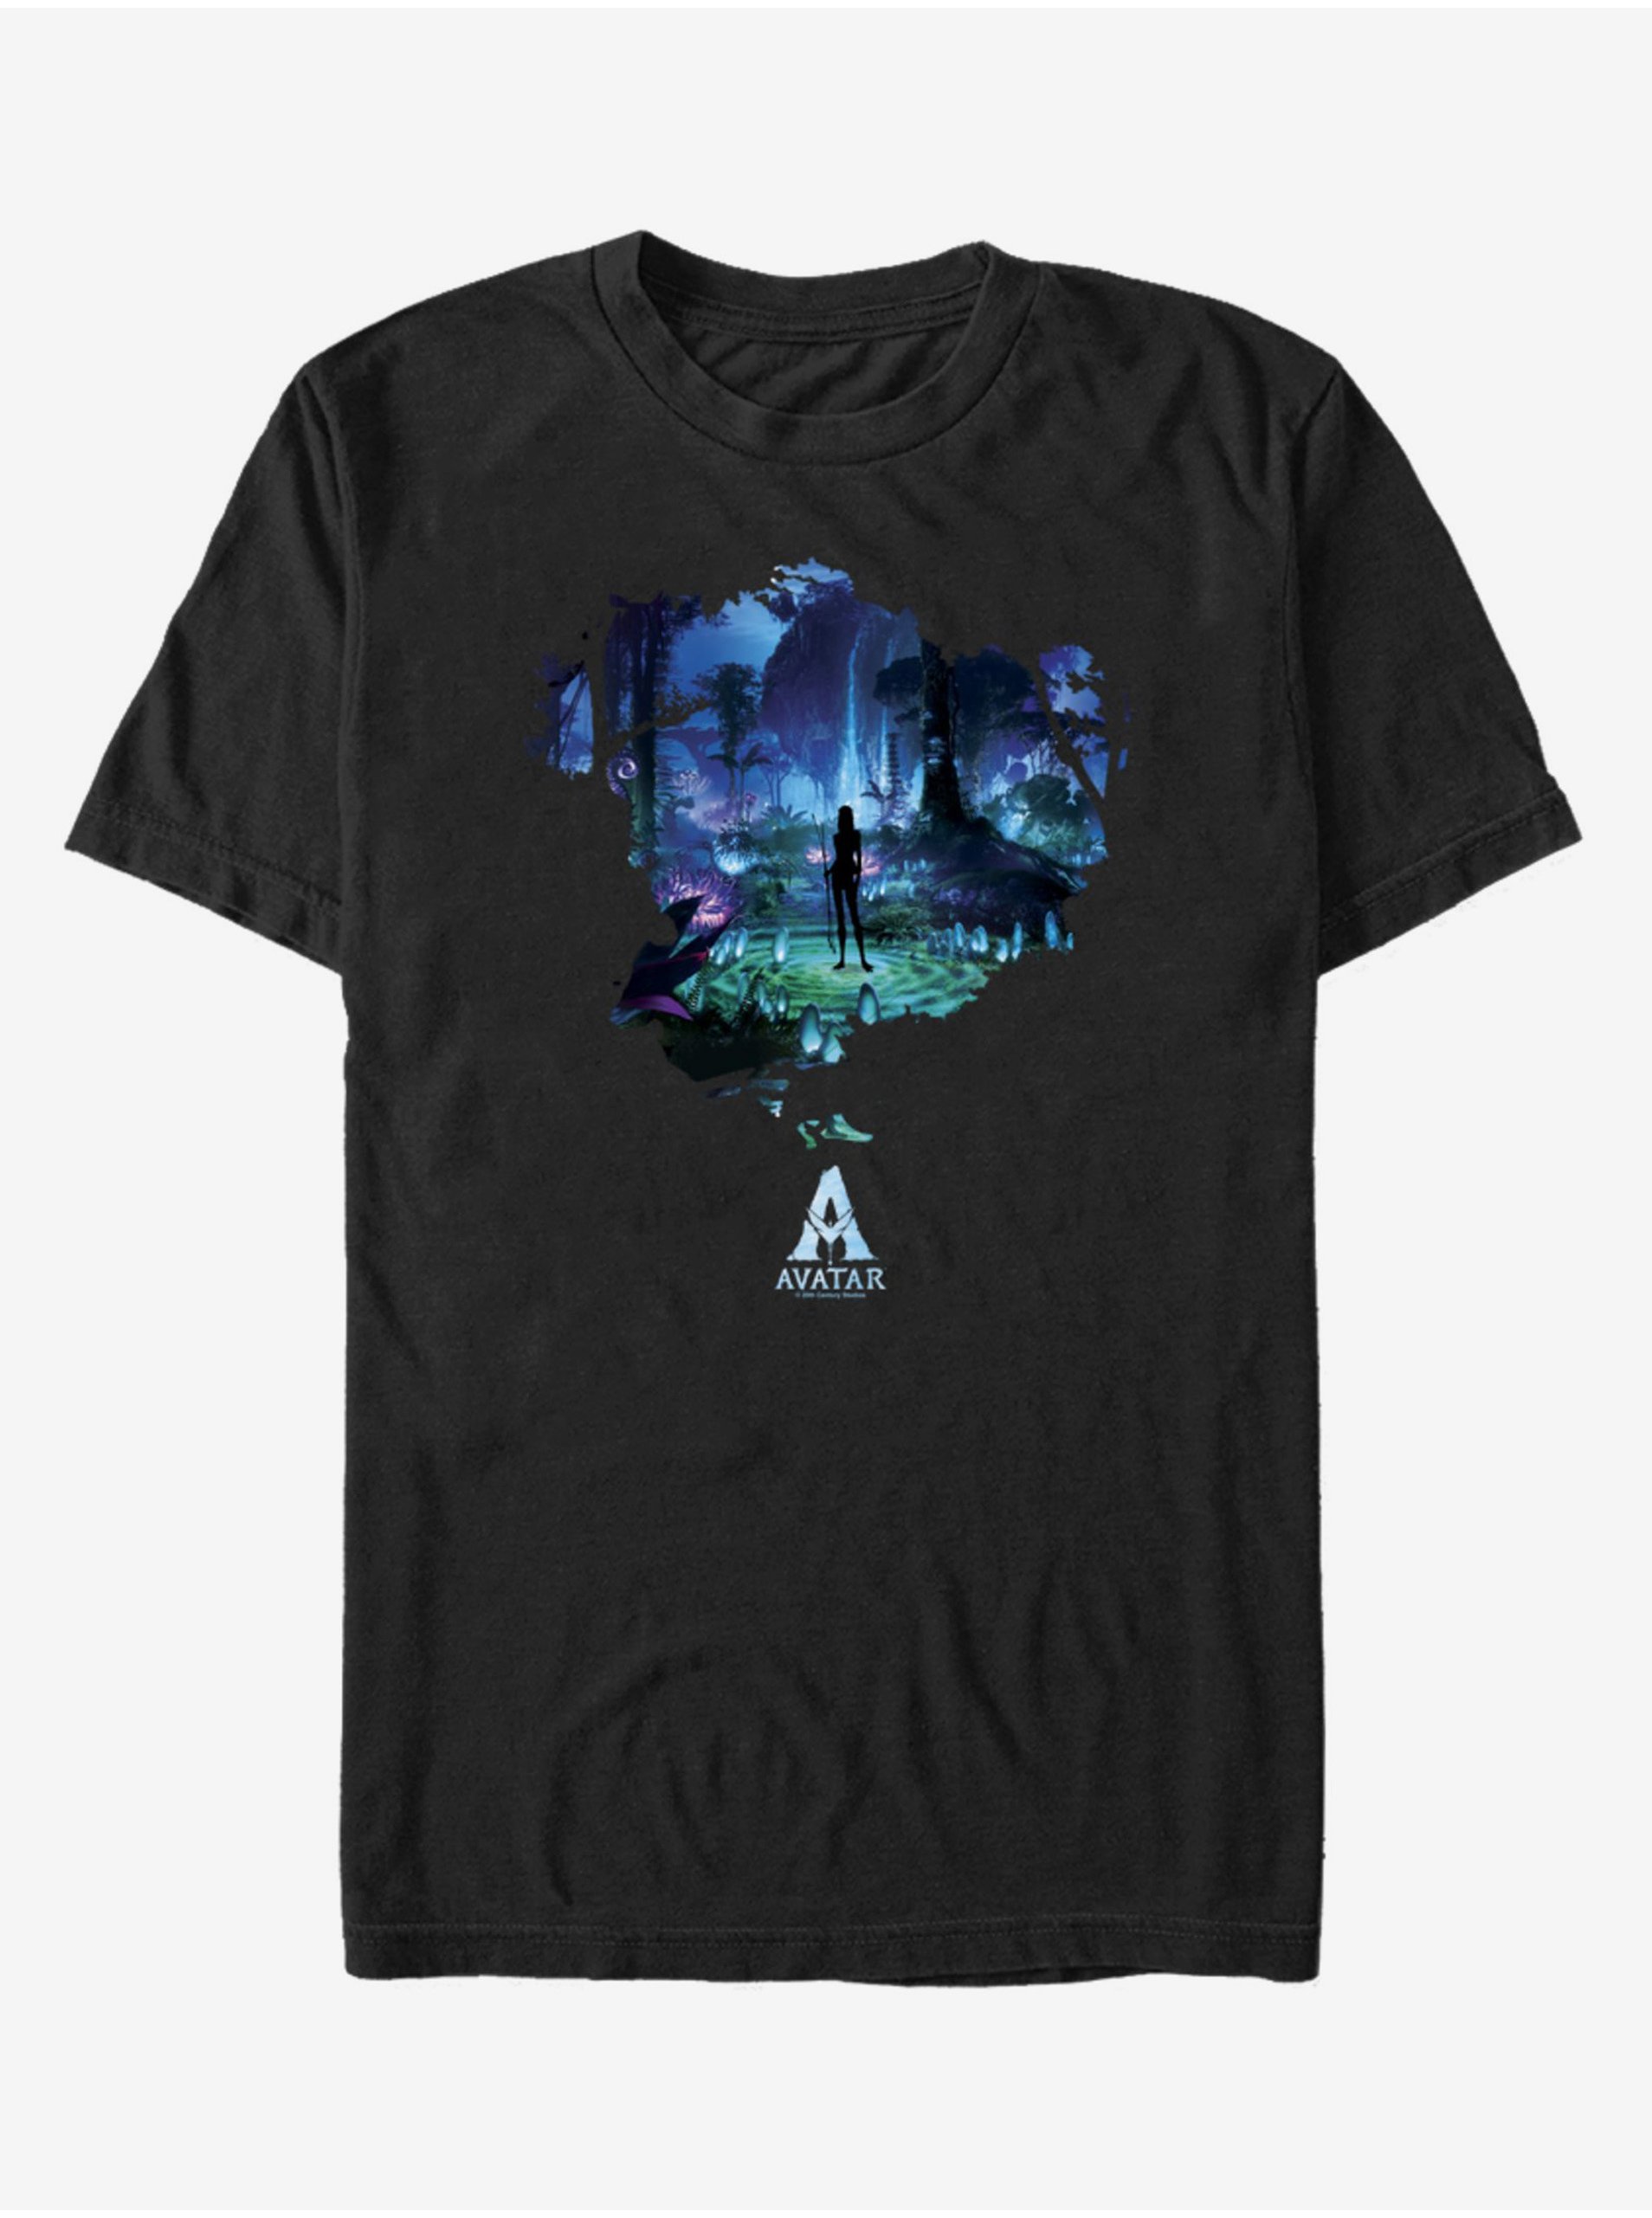 Lacno Noční Pandora Avatar ZOOT. FAN Twentieth Century Fox - unisex tričko